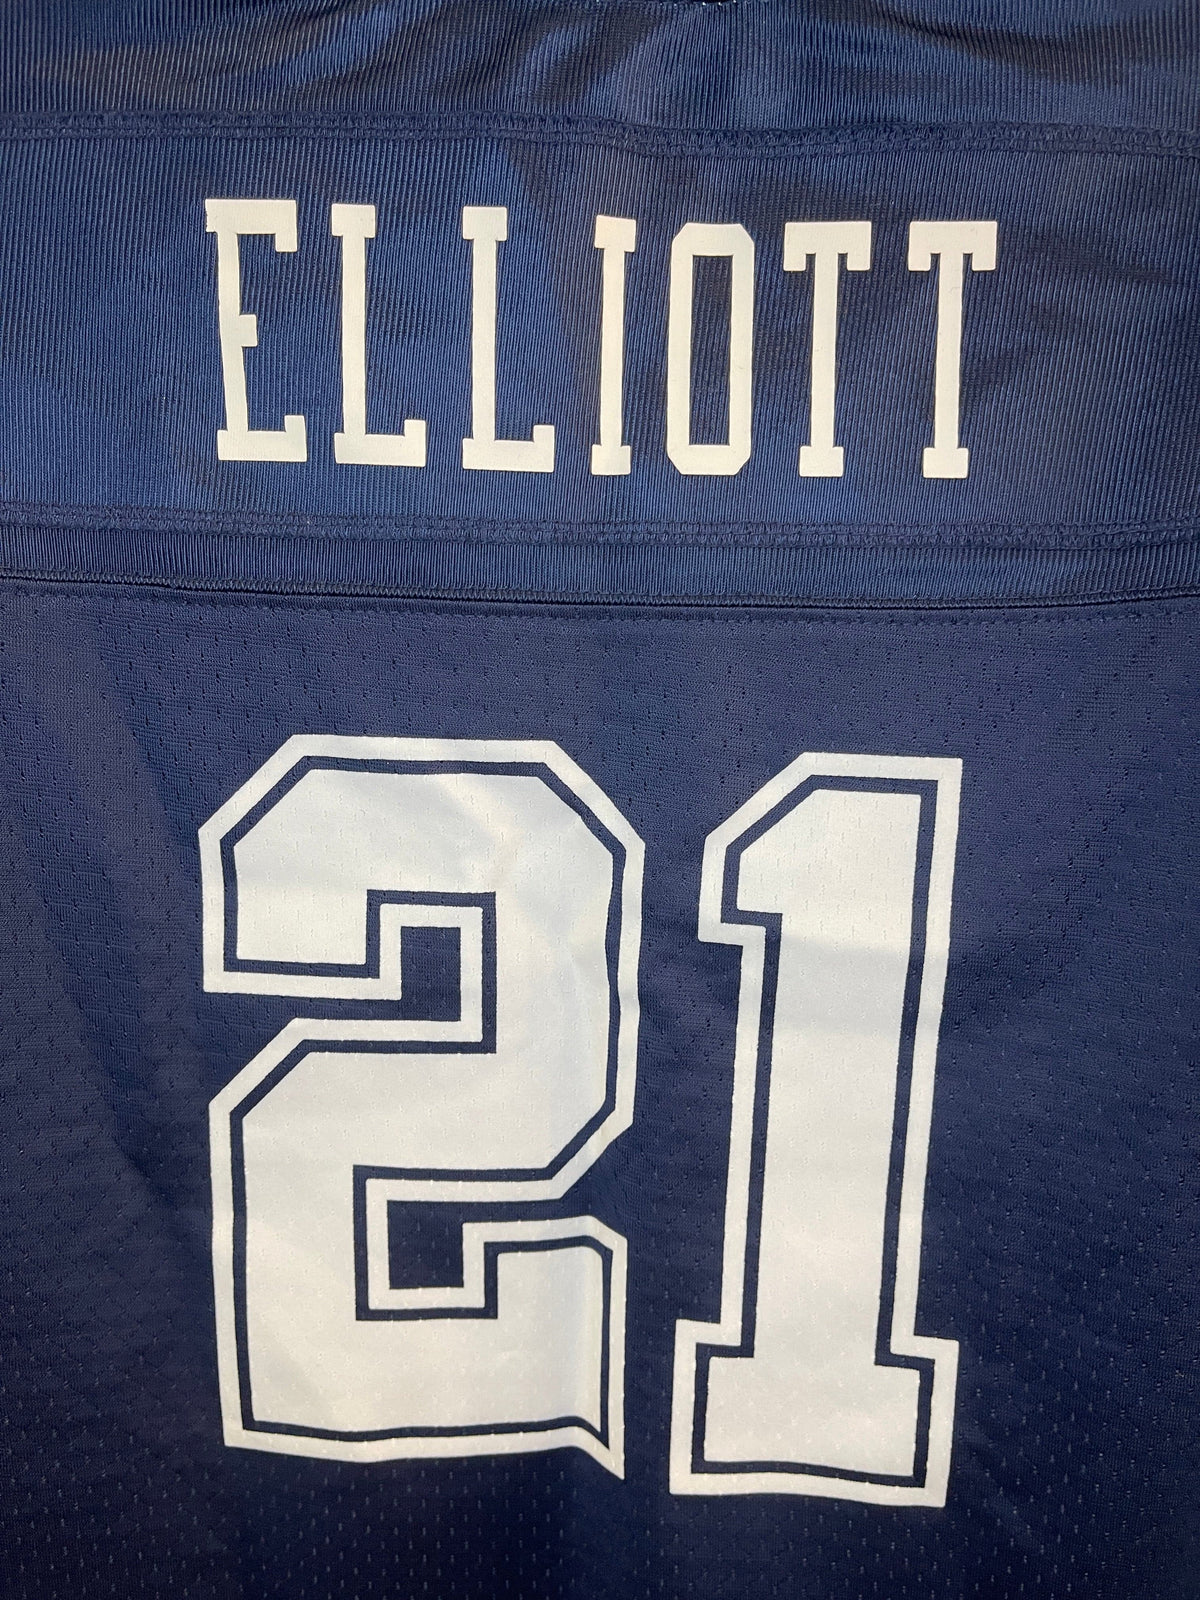 NFL Dallas Cowboys Ezekiel Elliott #21 Pro Line Jersey Youth Large 14-16 NWT